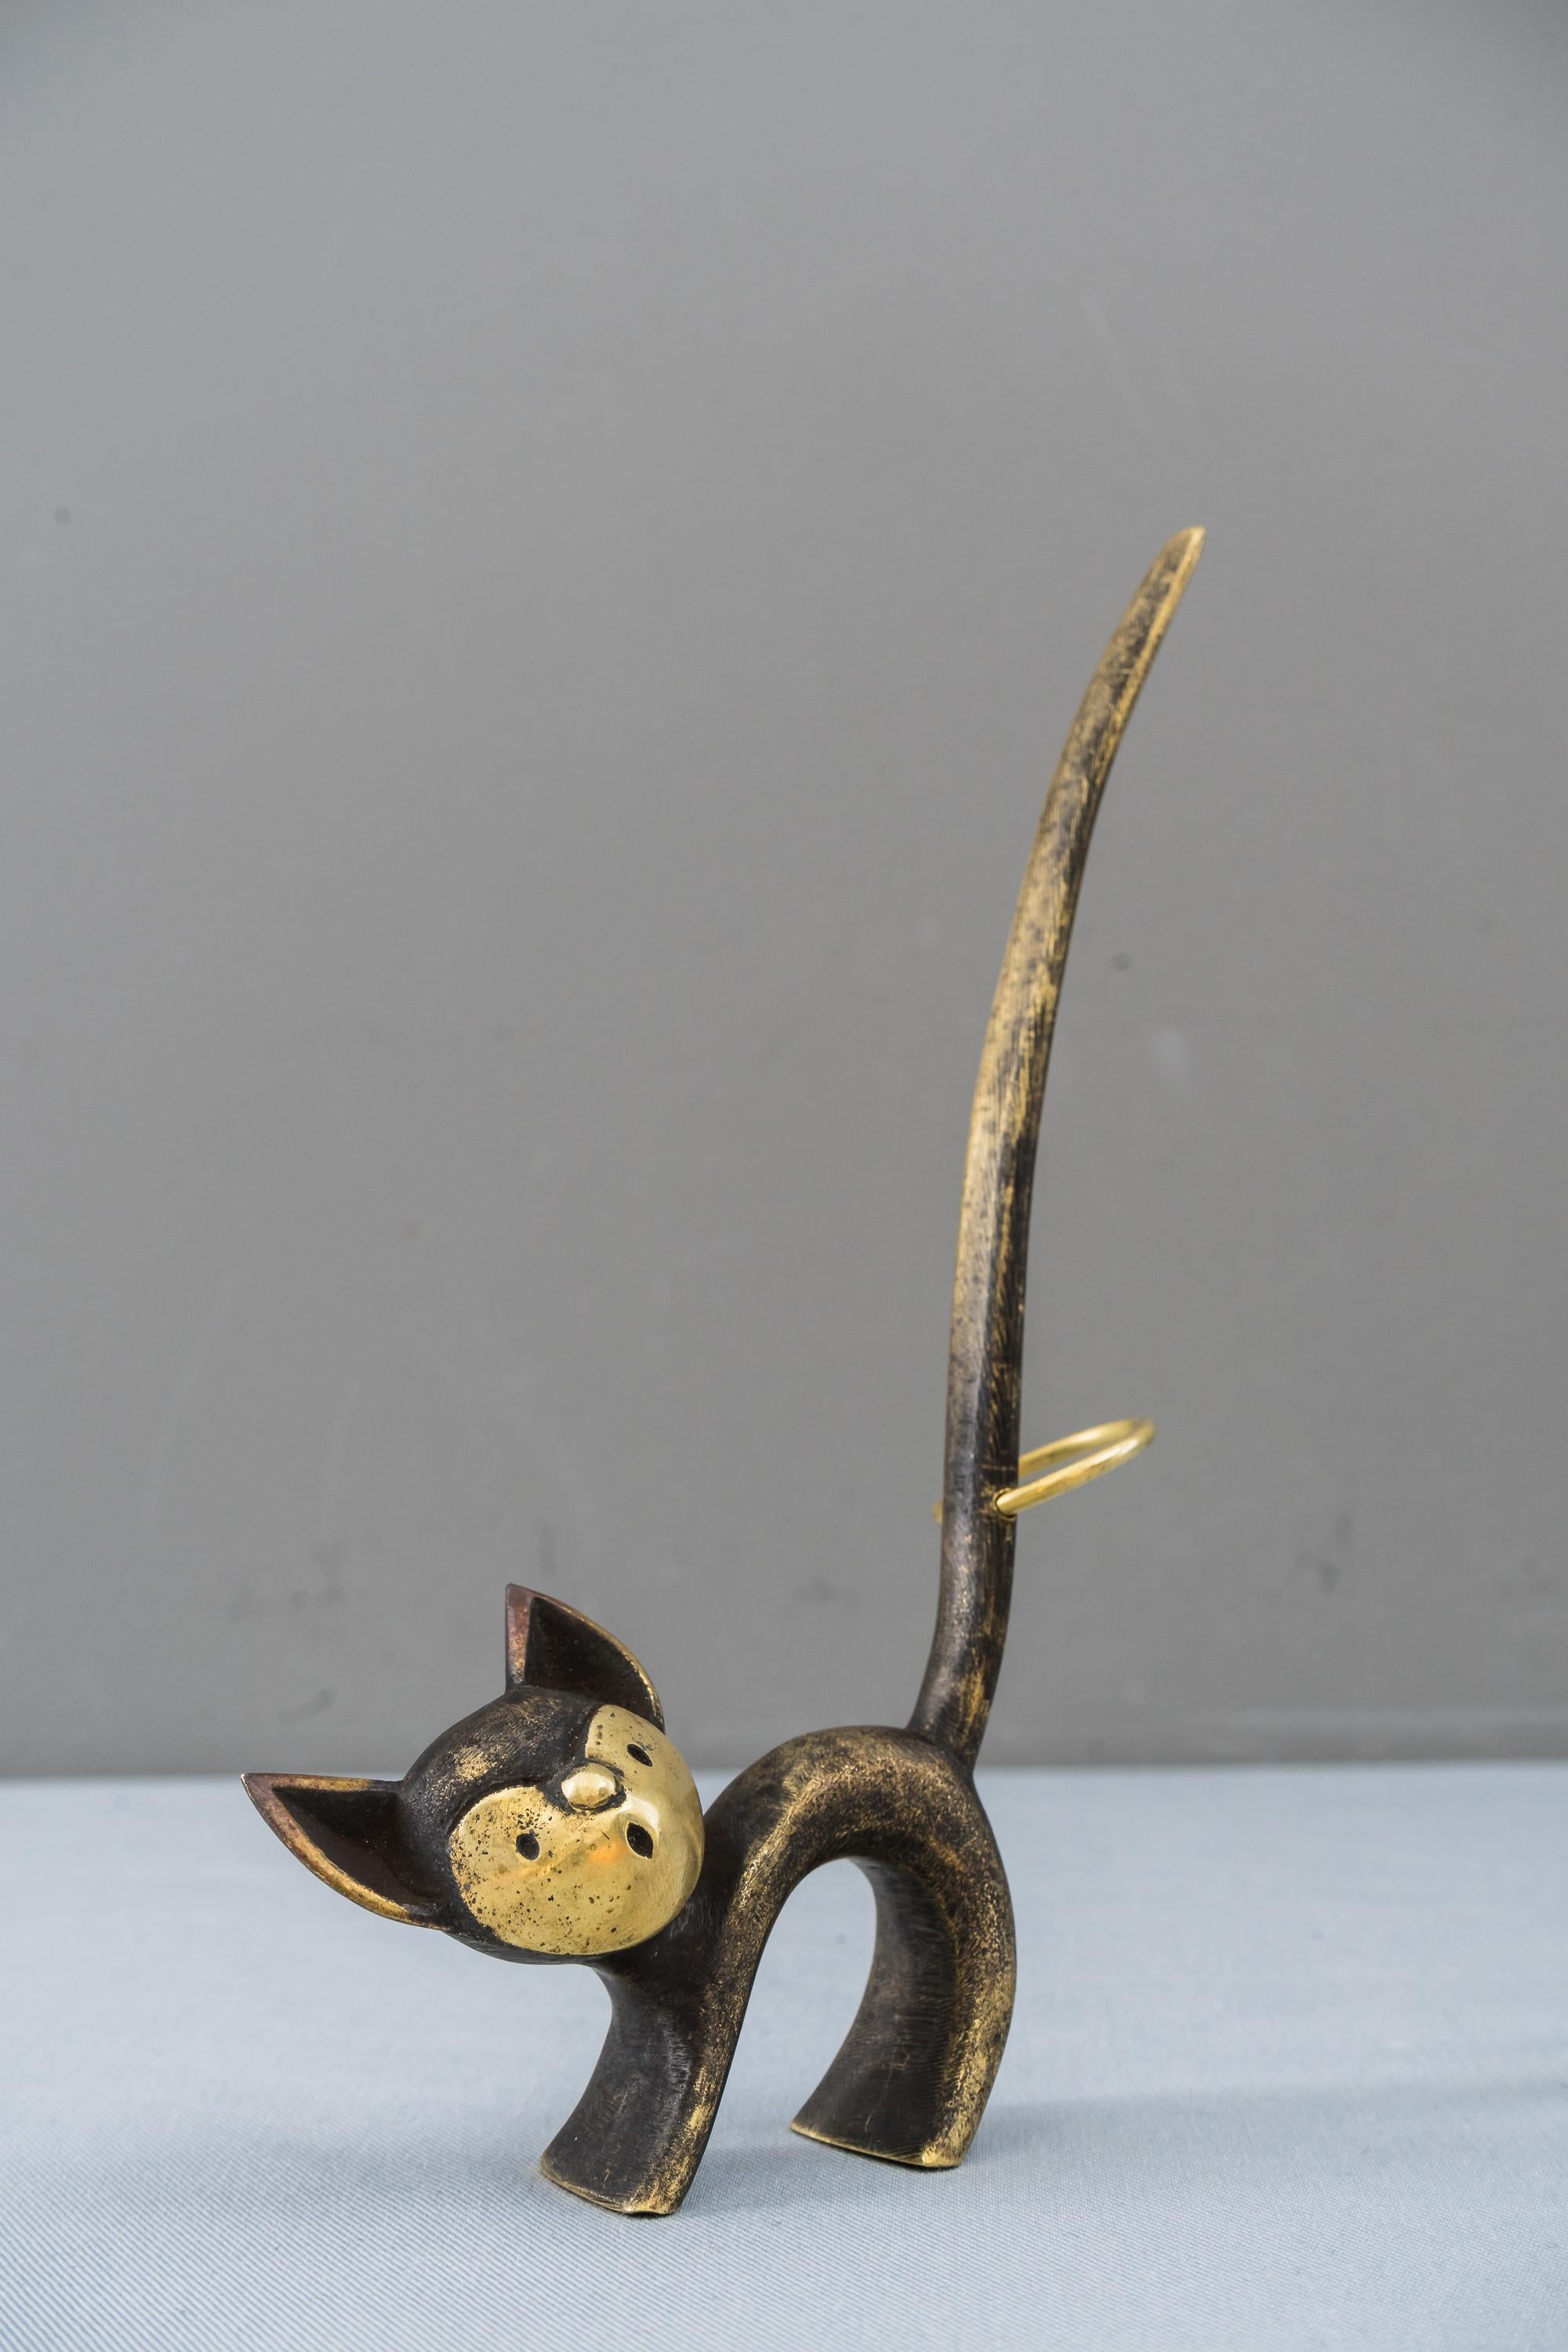 Walter Bosse brass cat figurine pretzel holder, ring holder
Original condition.